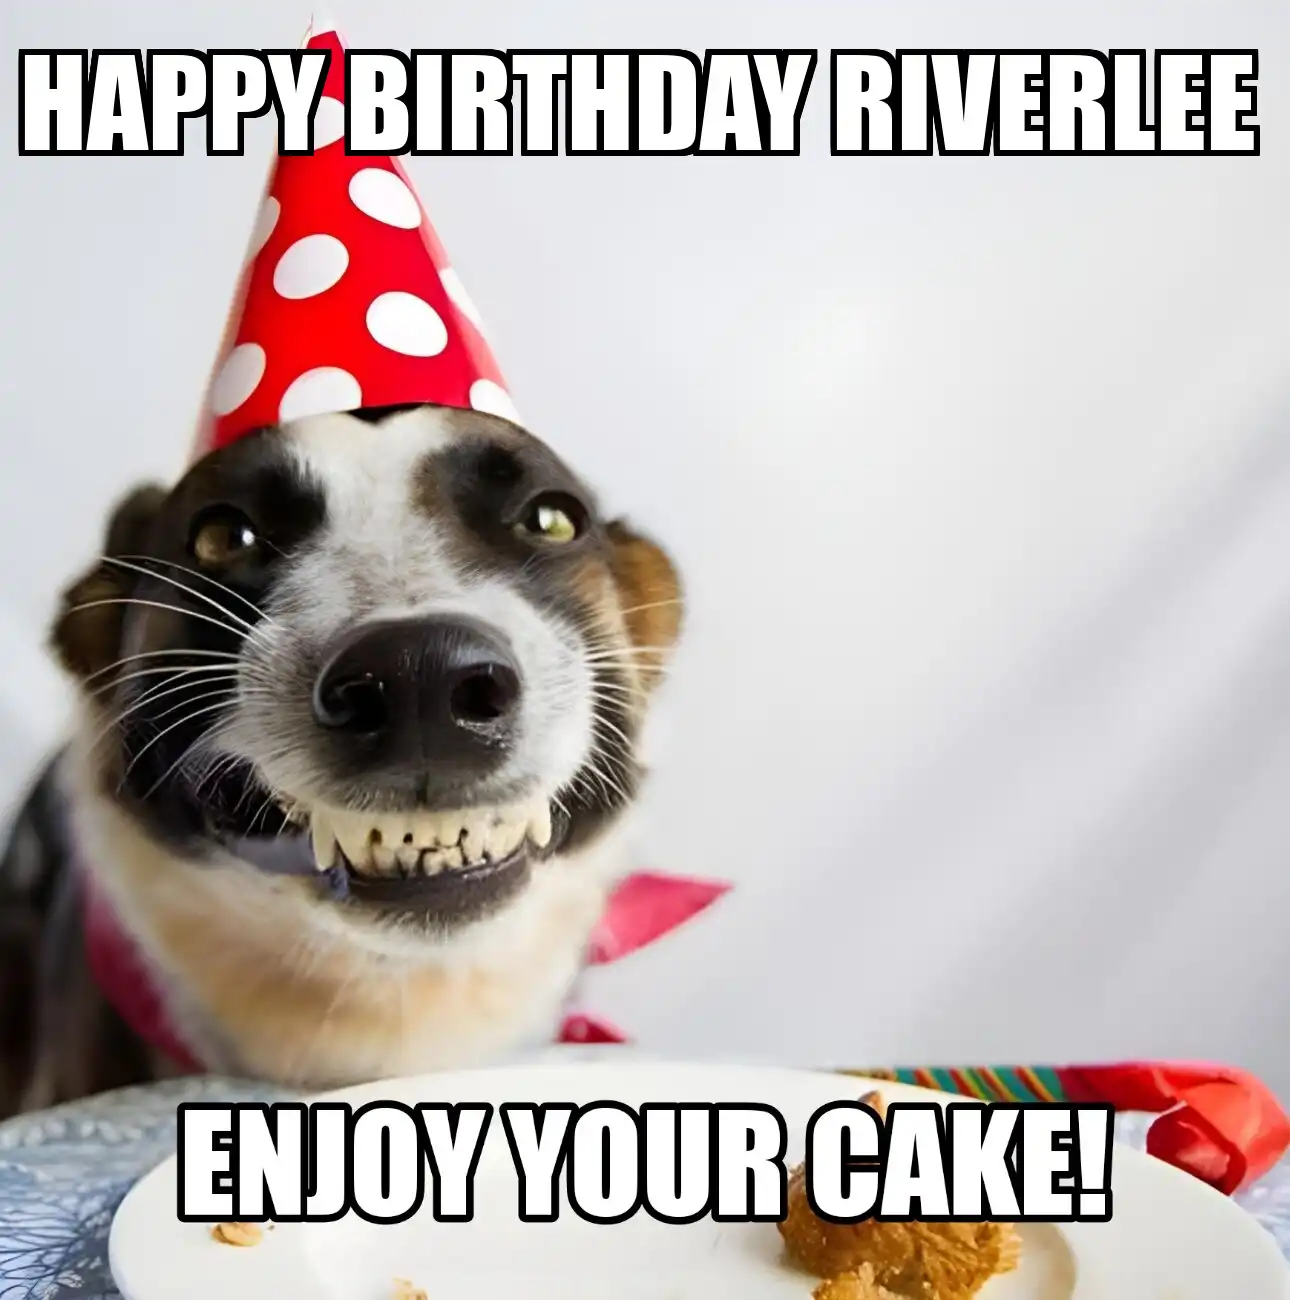 Happy Birthday Riverlee Enjoy Your Cake Dog Meme